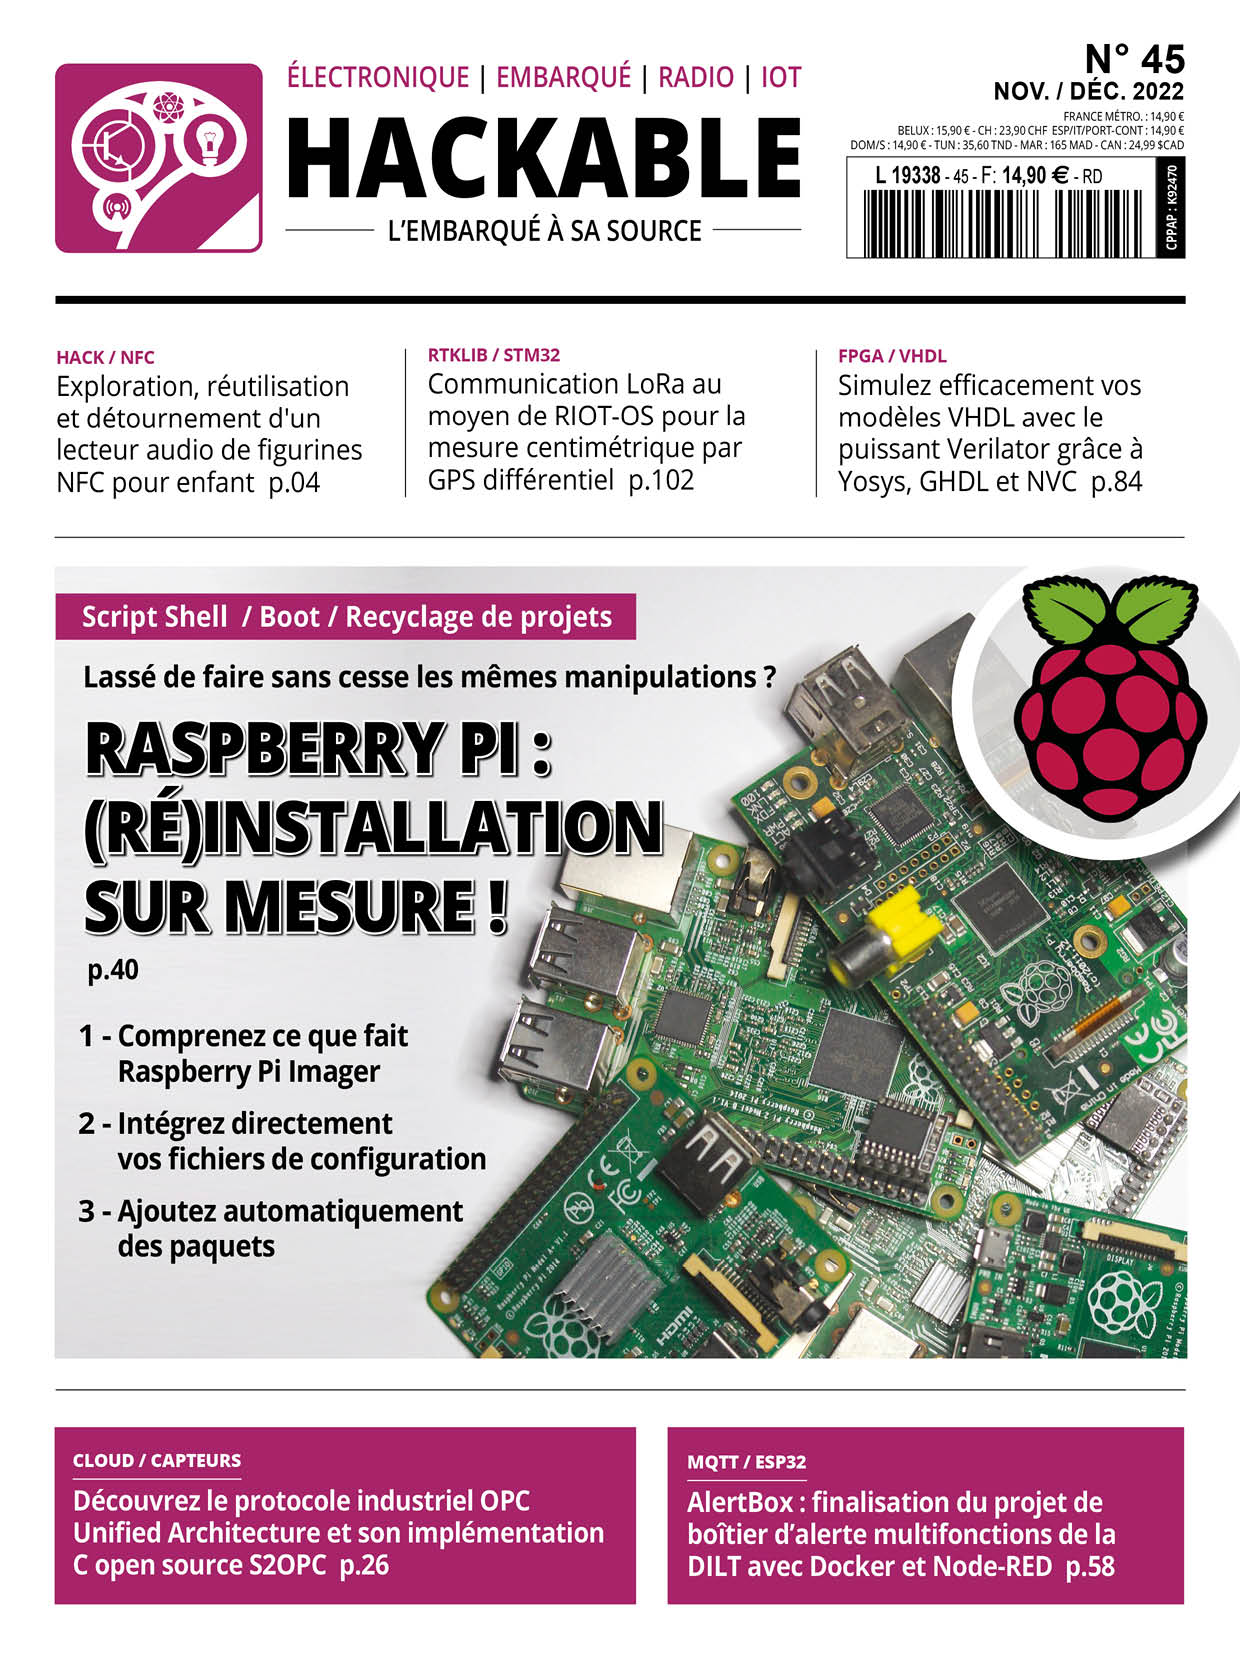 Raspberry Pi : (Ré)installation sur mesure !